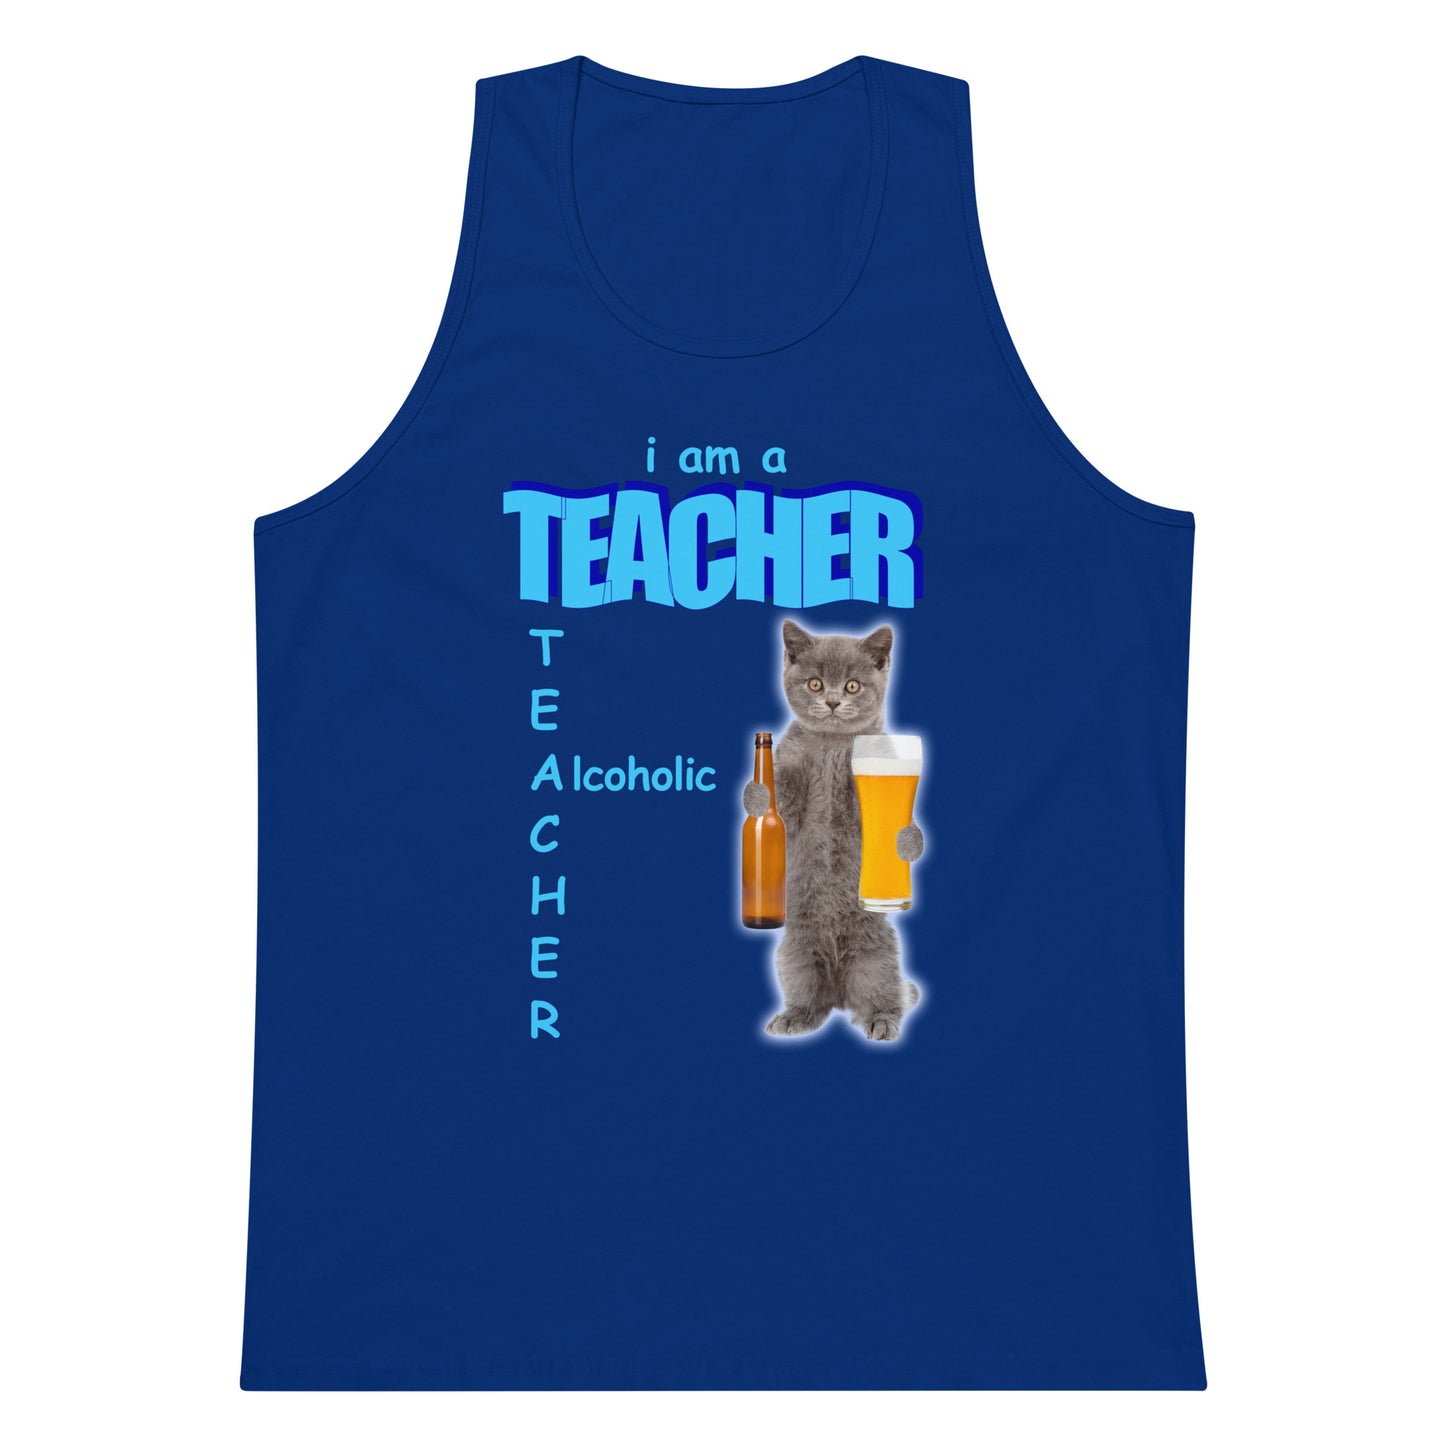 I Am a Teacher (Alcoholic) tank top